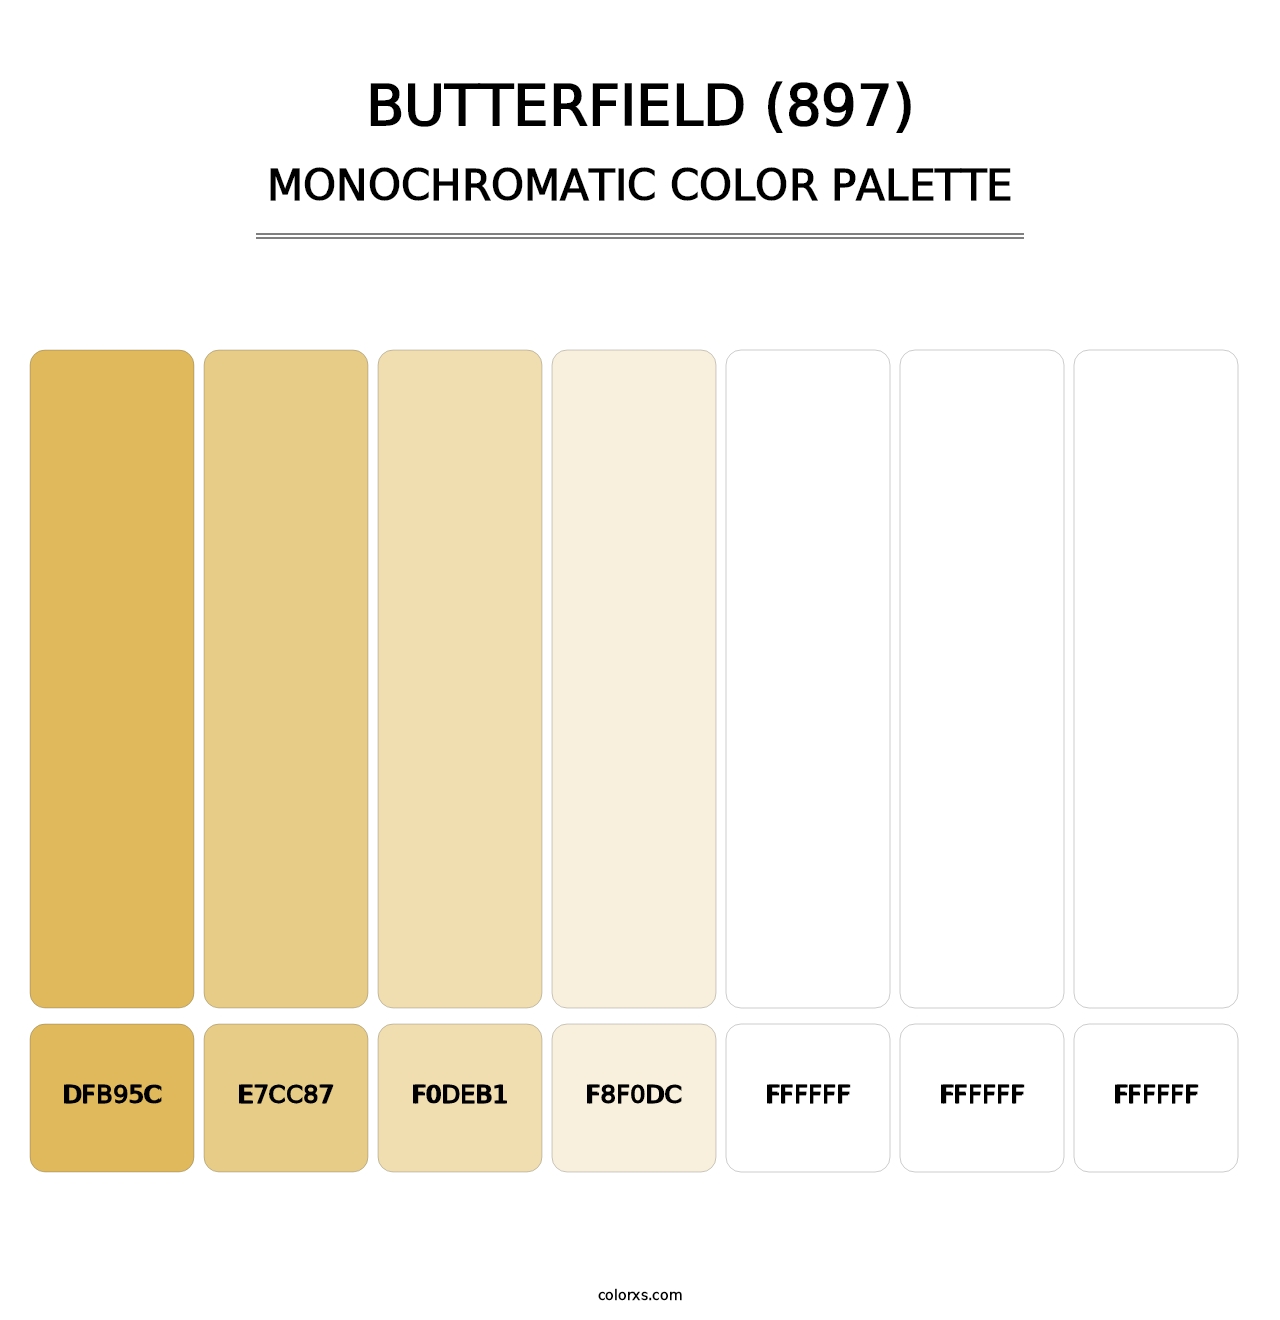 Butterfield (897) - Monochromatic Color Palette